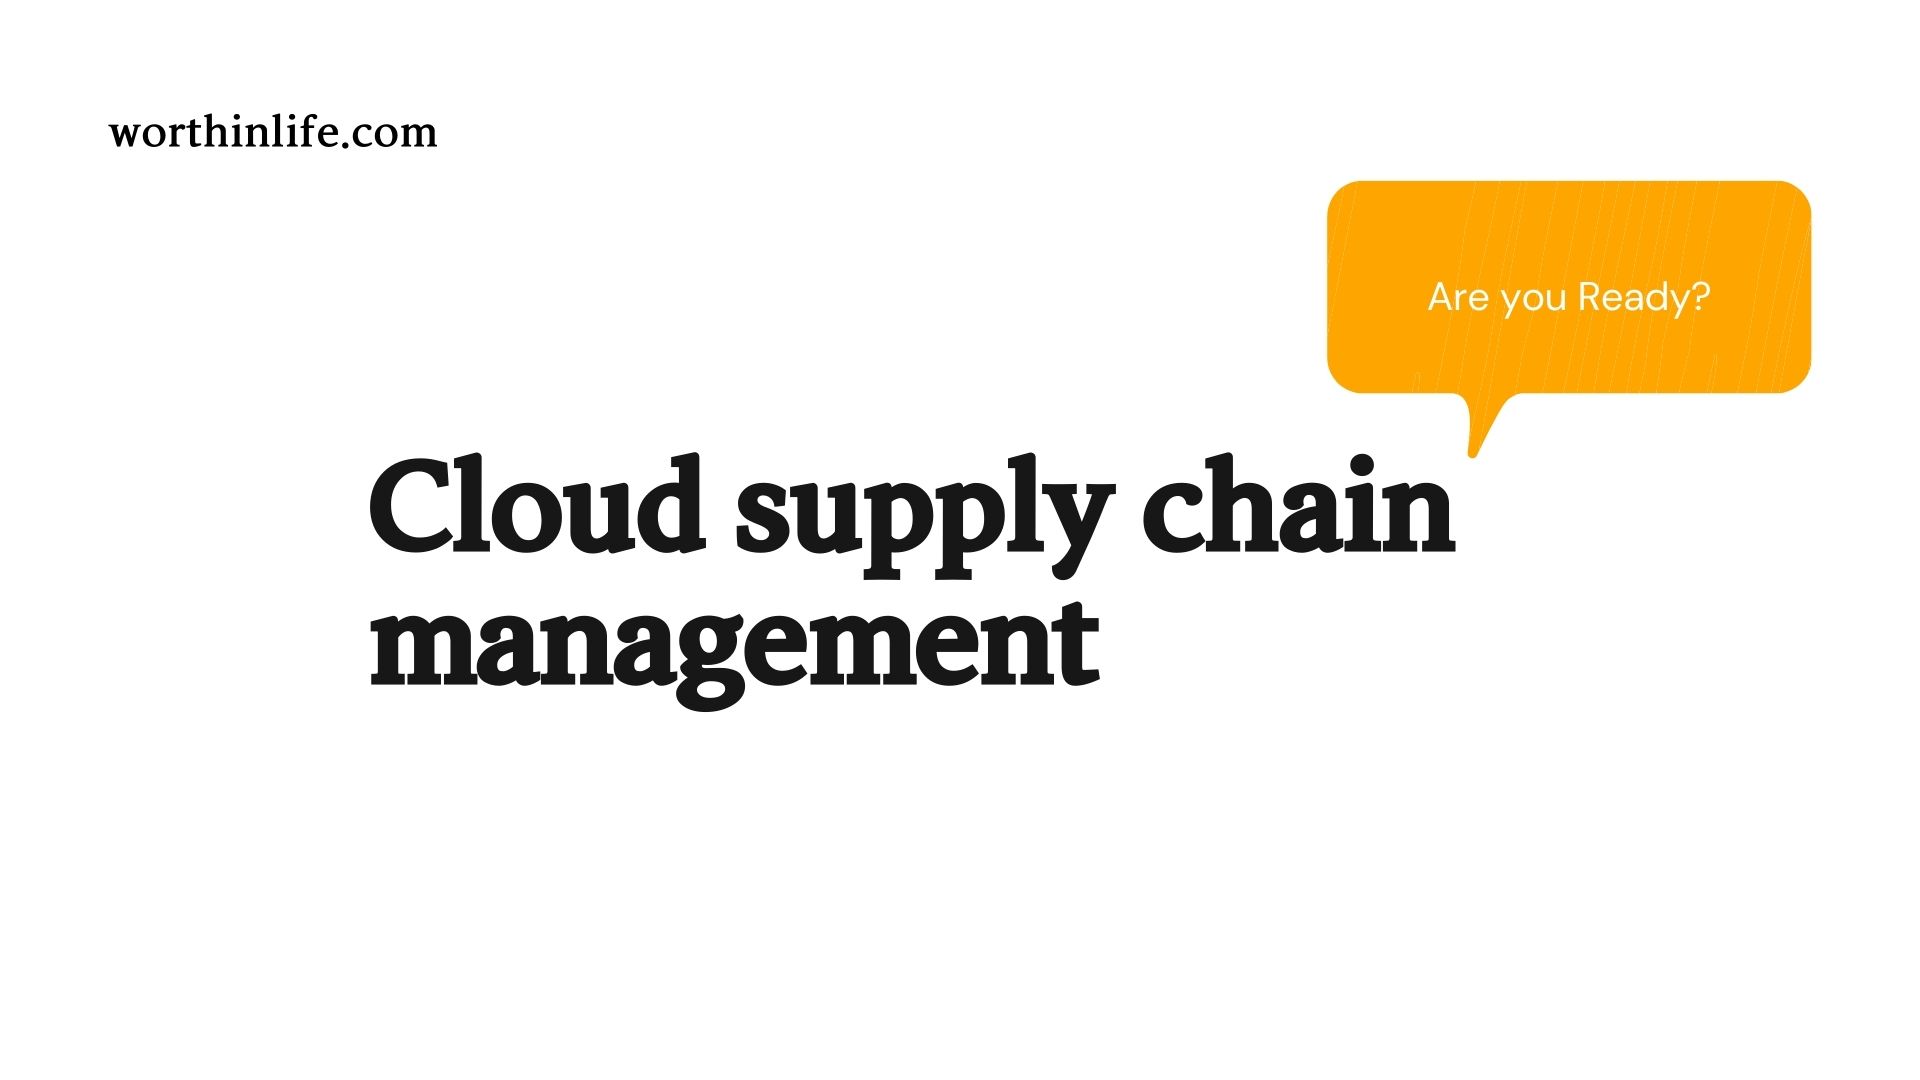 Cloud supply chain management